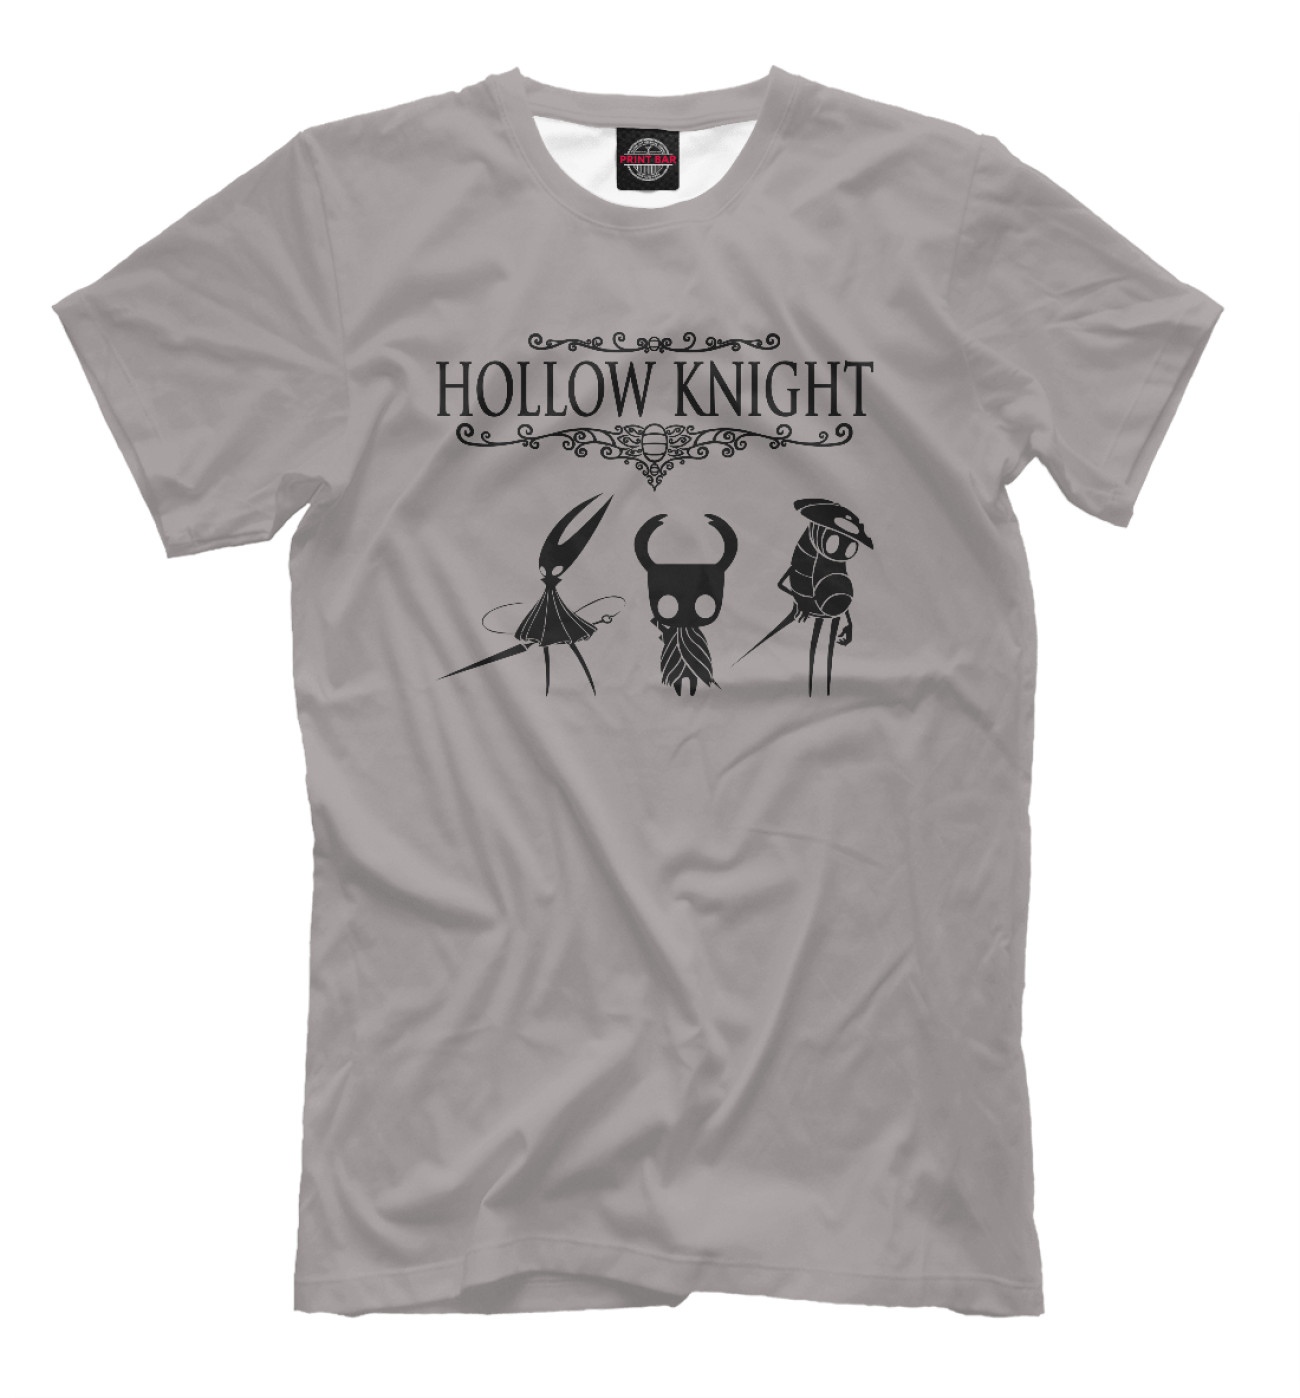 Мужская Футболка Hollow Knight, артикул: RPG-513106-fut-2